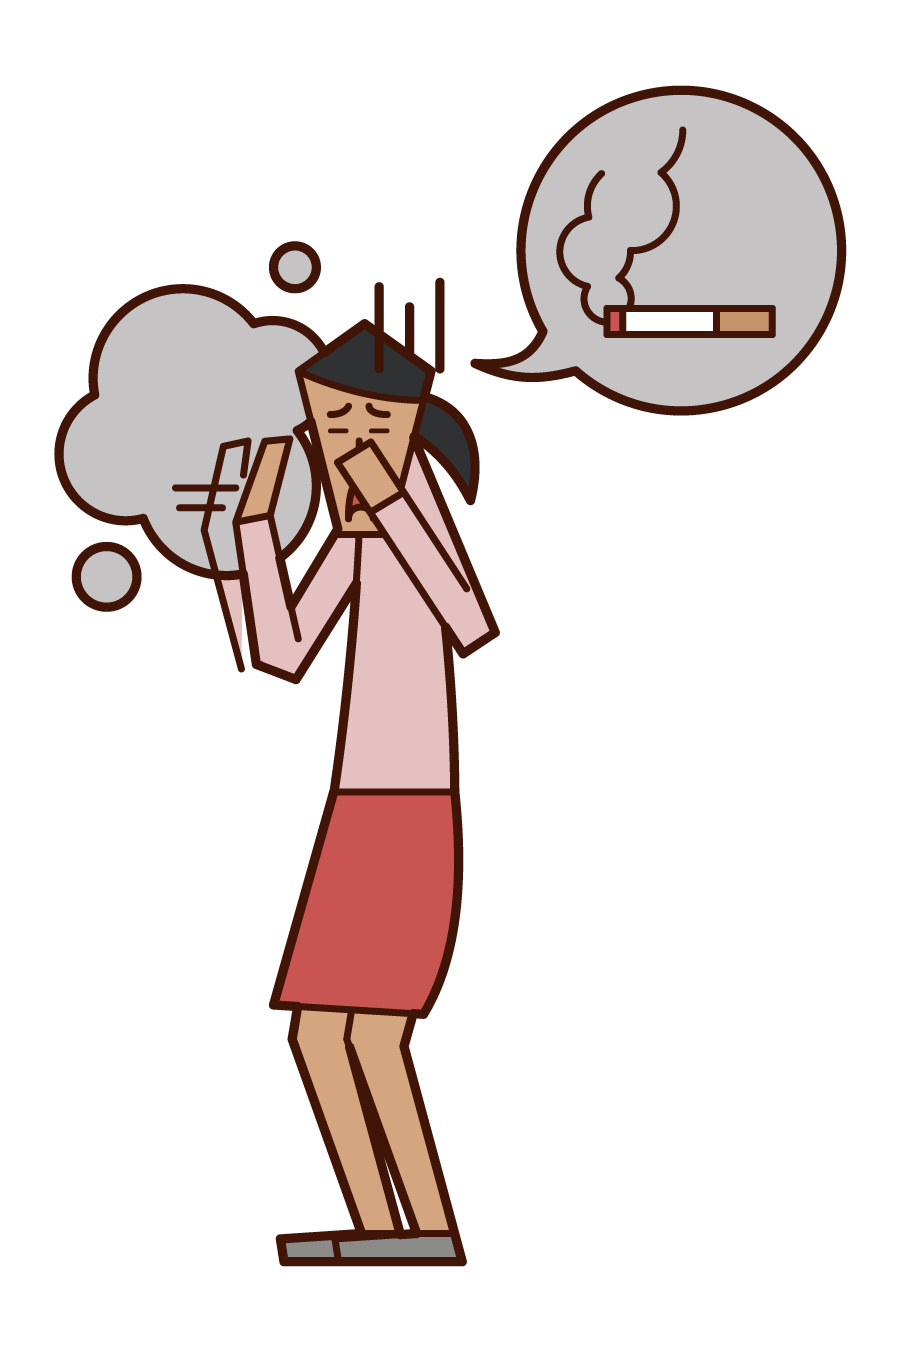 Illustration of a woman who hates cigarette smoke